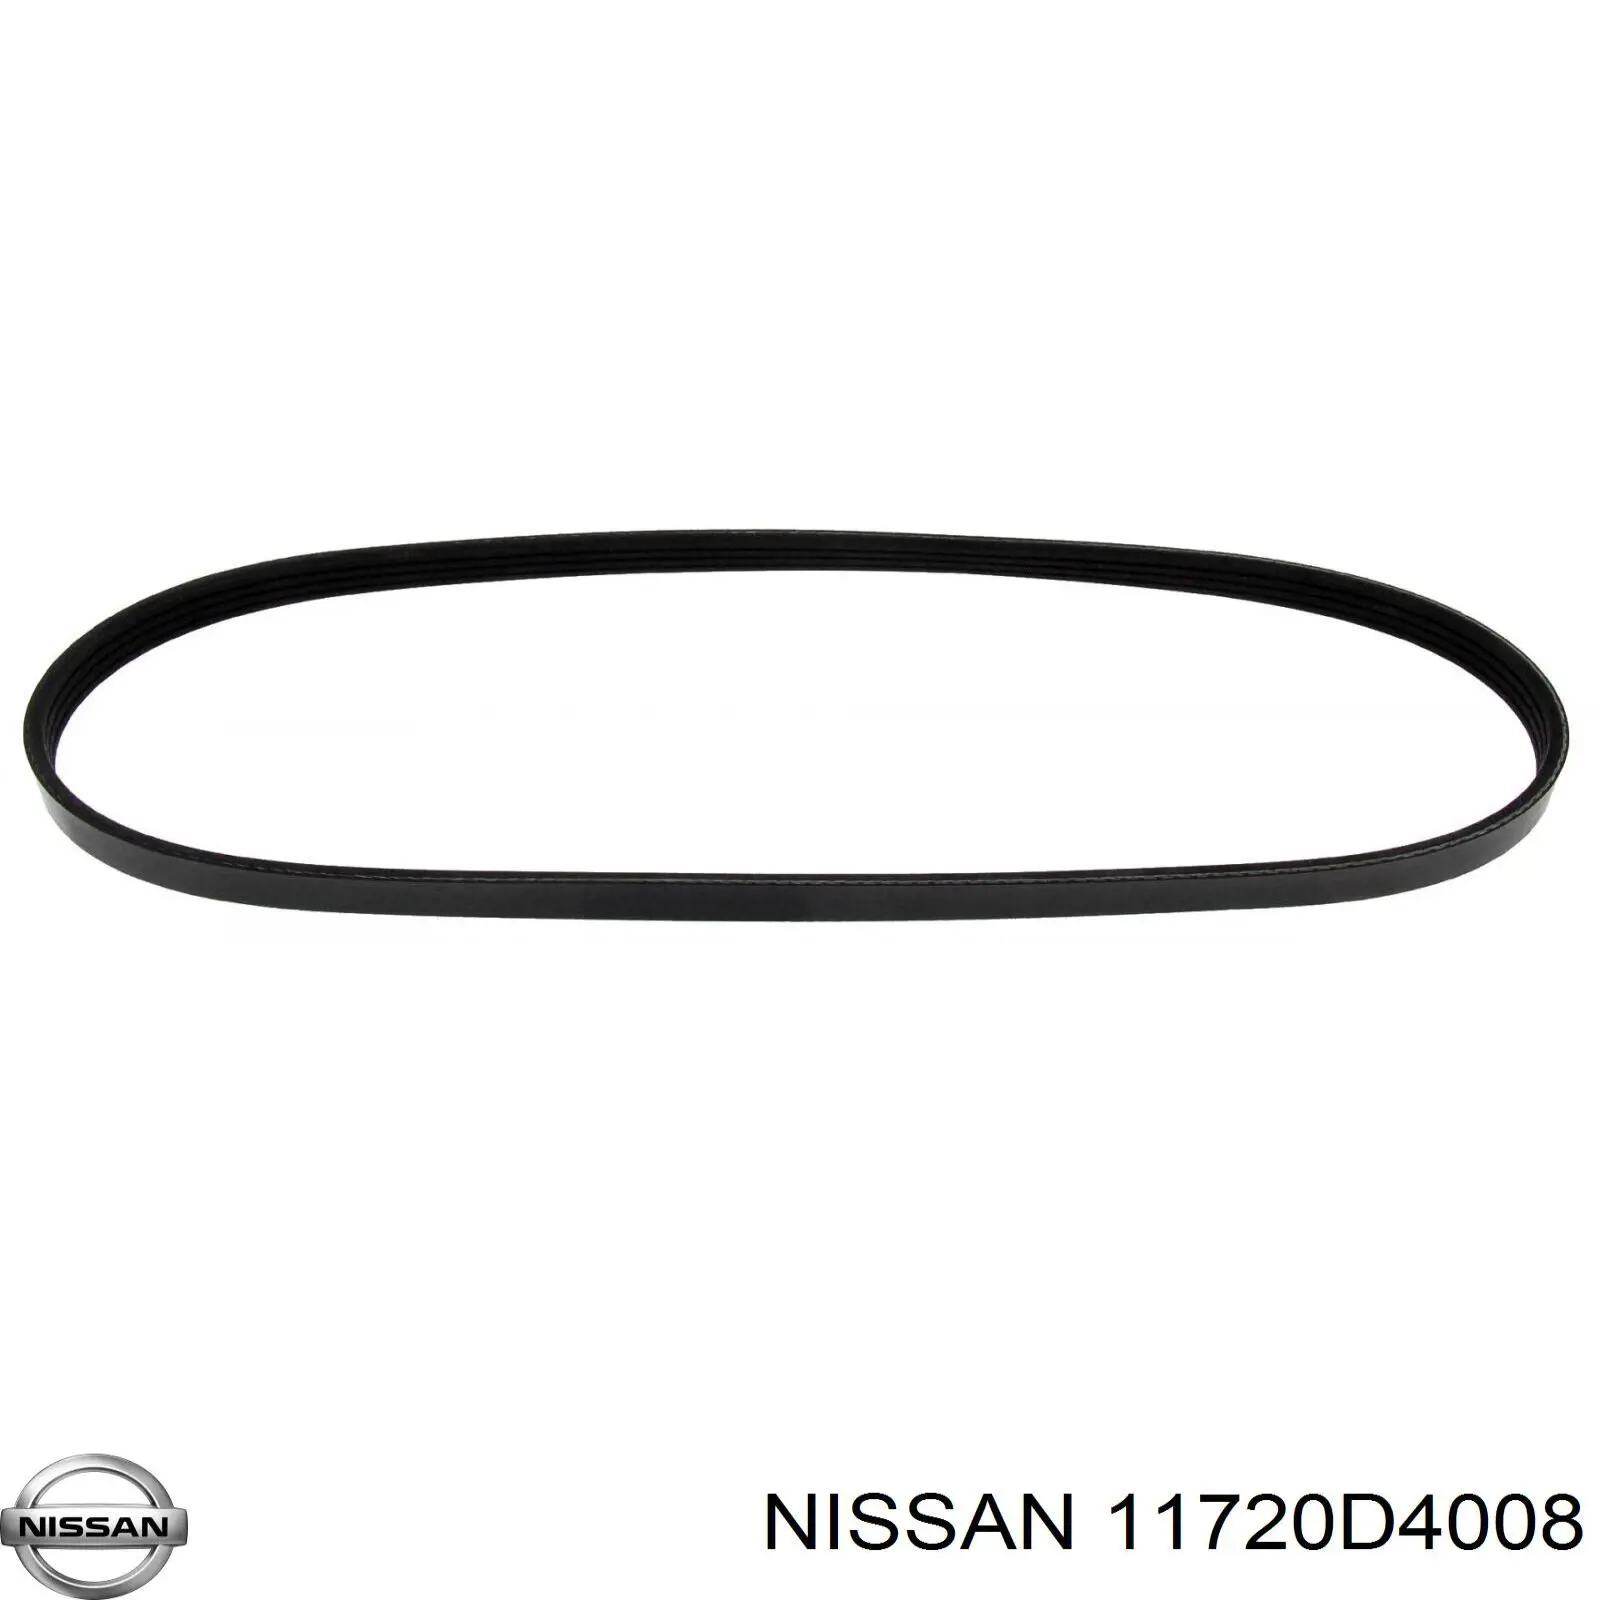 11720D4008 Nissan correa trapezoidal